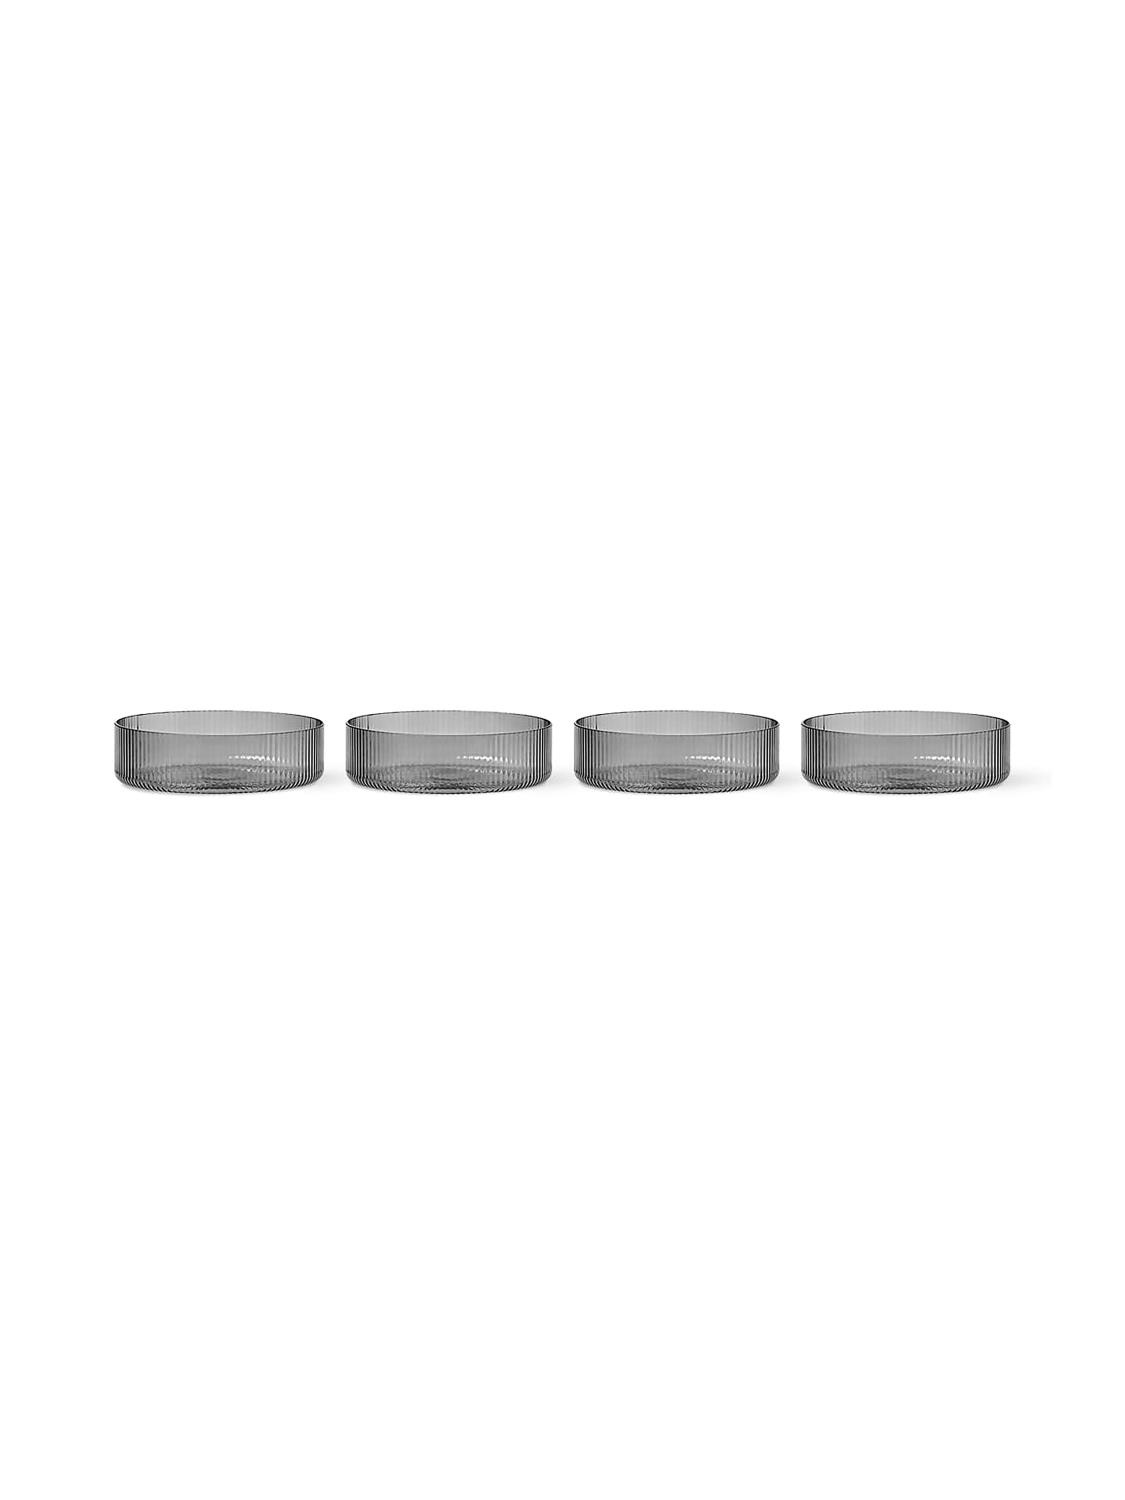 Ferm Living - Ripple Serving Bowls - Set of 4 - Smoked Grey